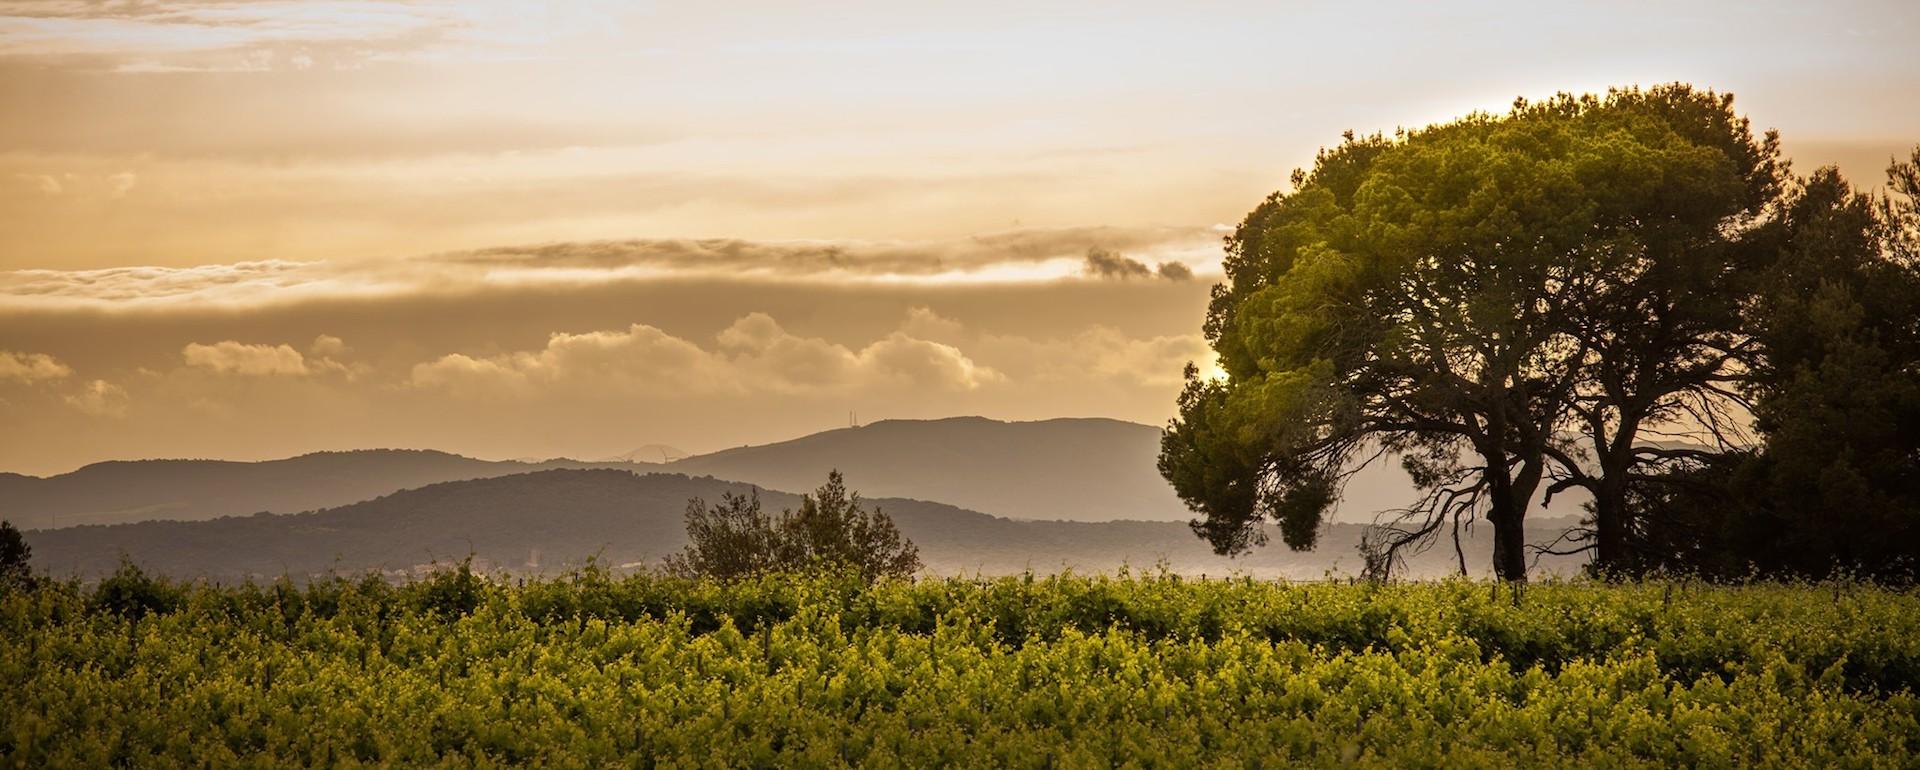 Vignobles de la vallée du Rhône